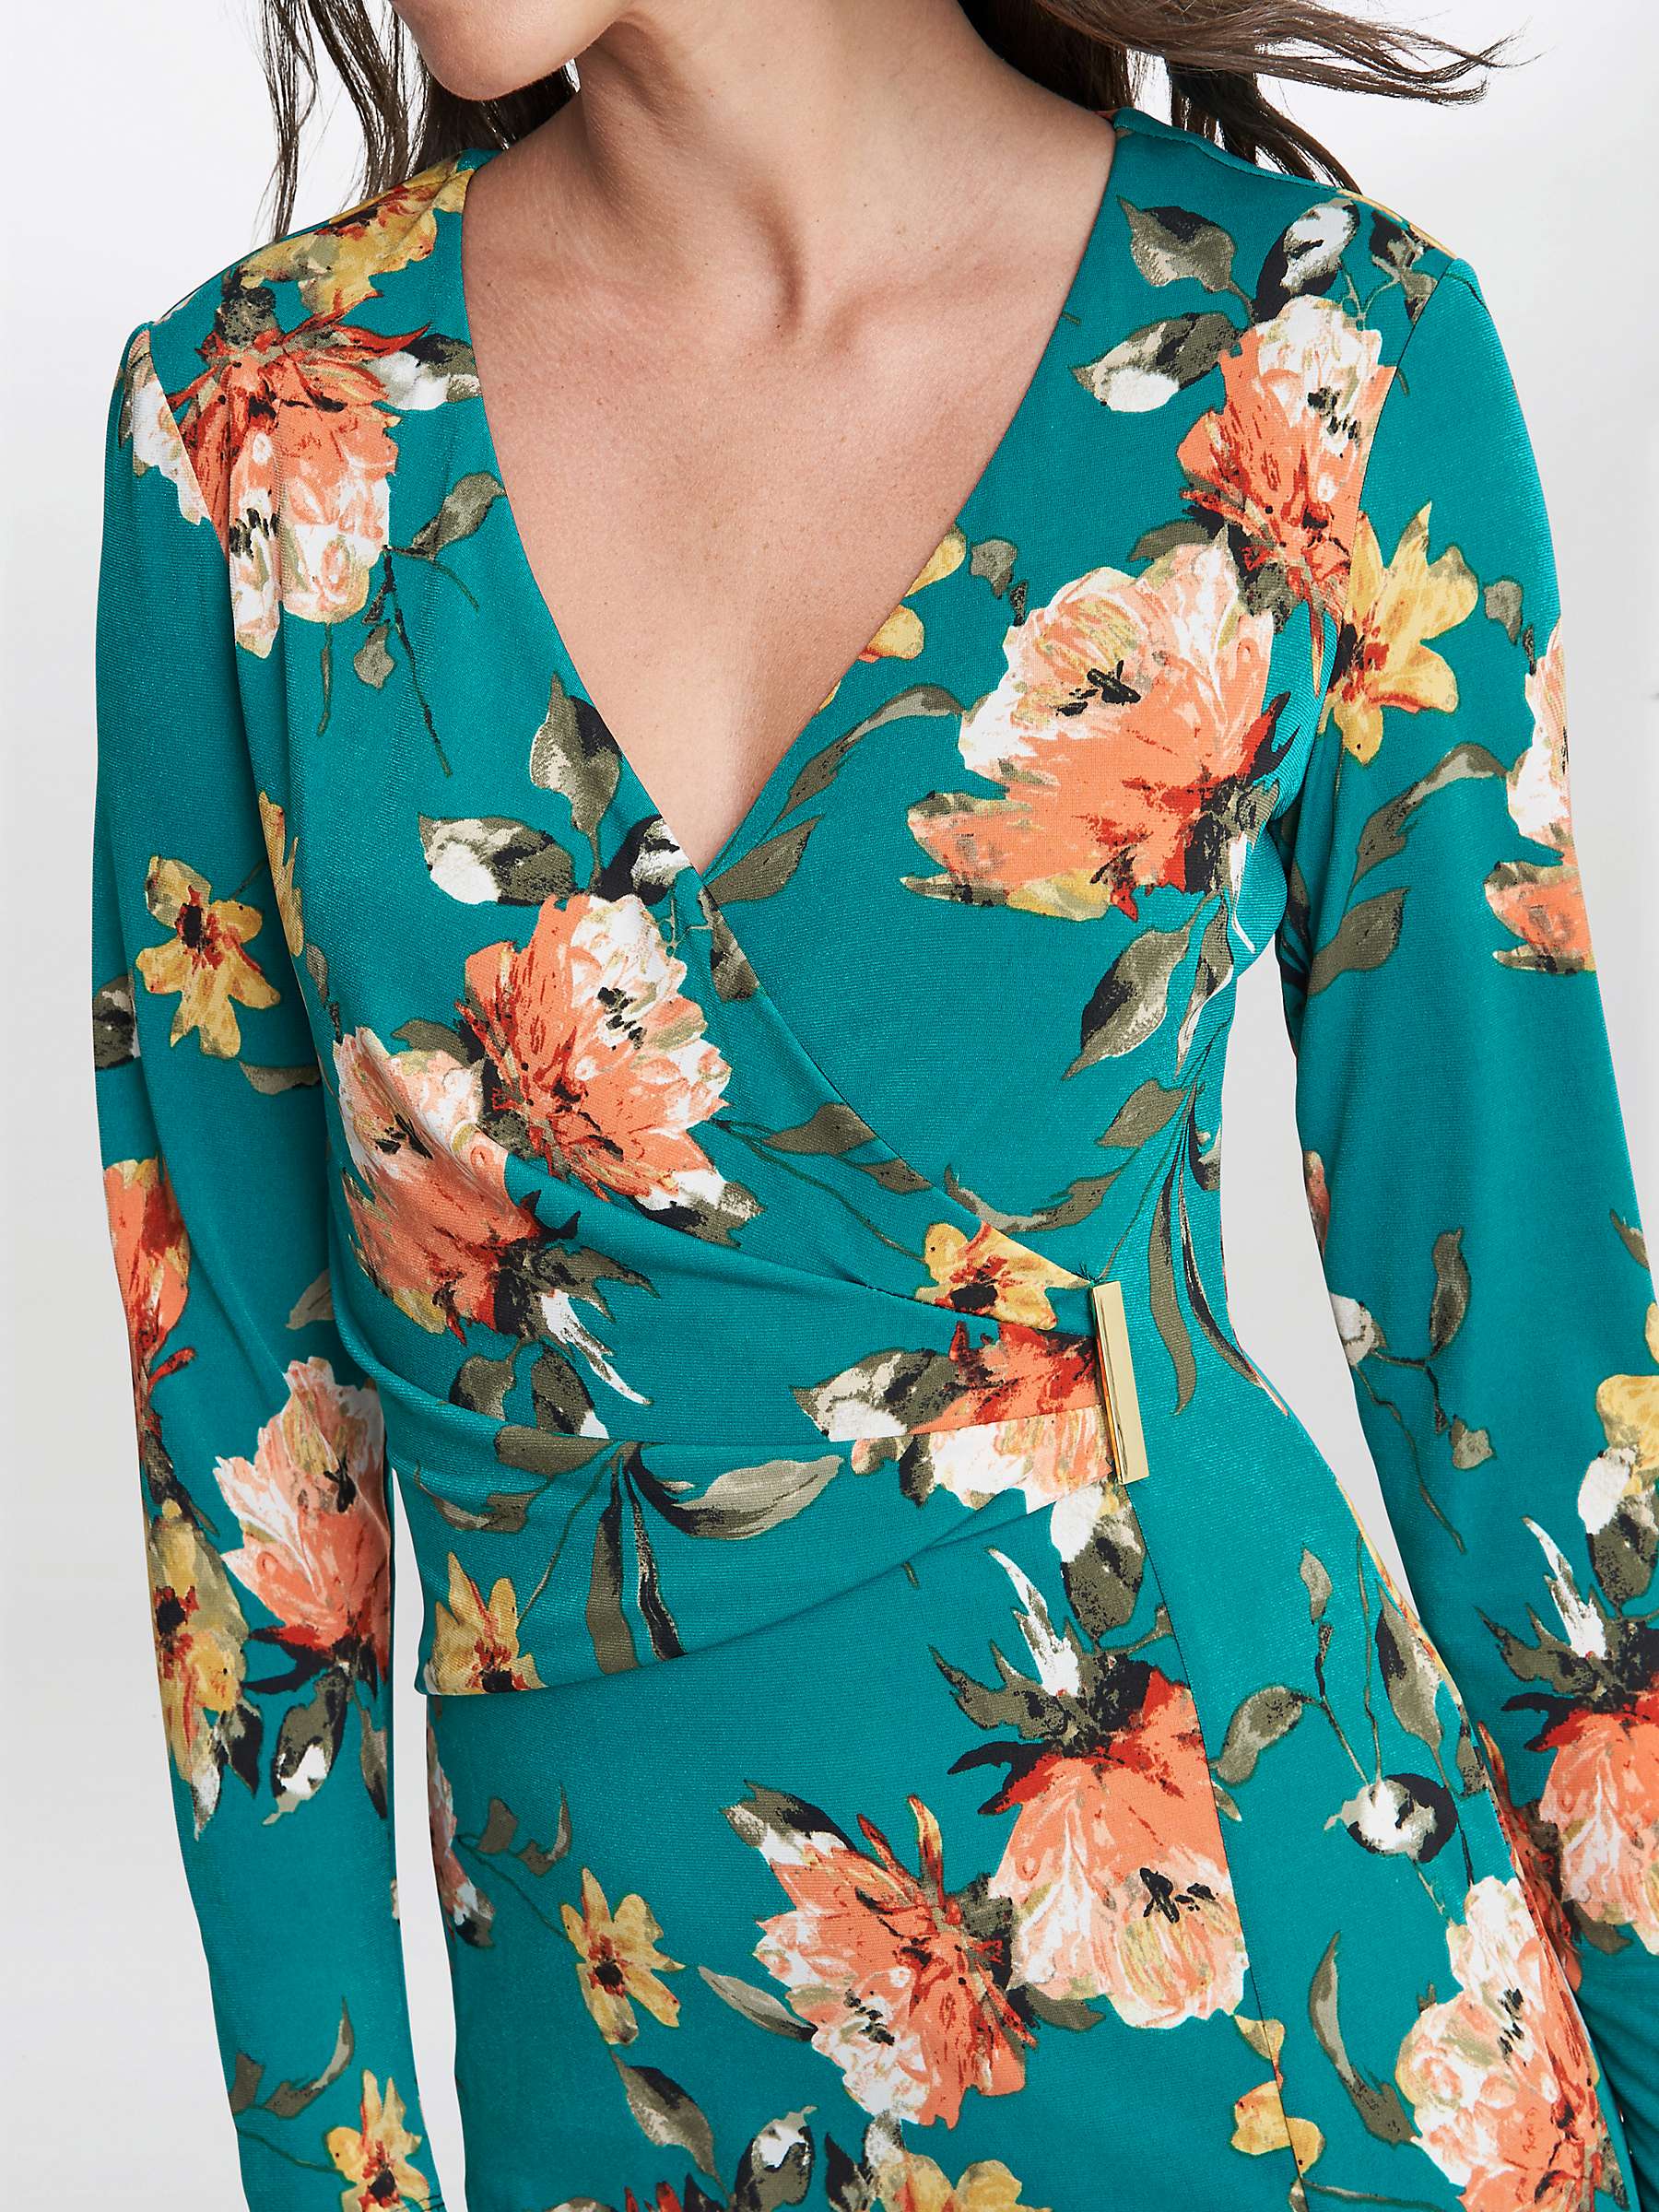 Buy Gina Bacconi Harper Wrap Dress, Green/Multi Online at johnlewis.com